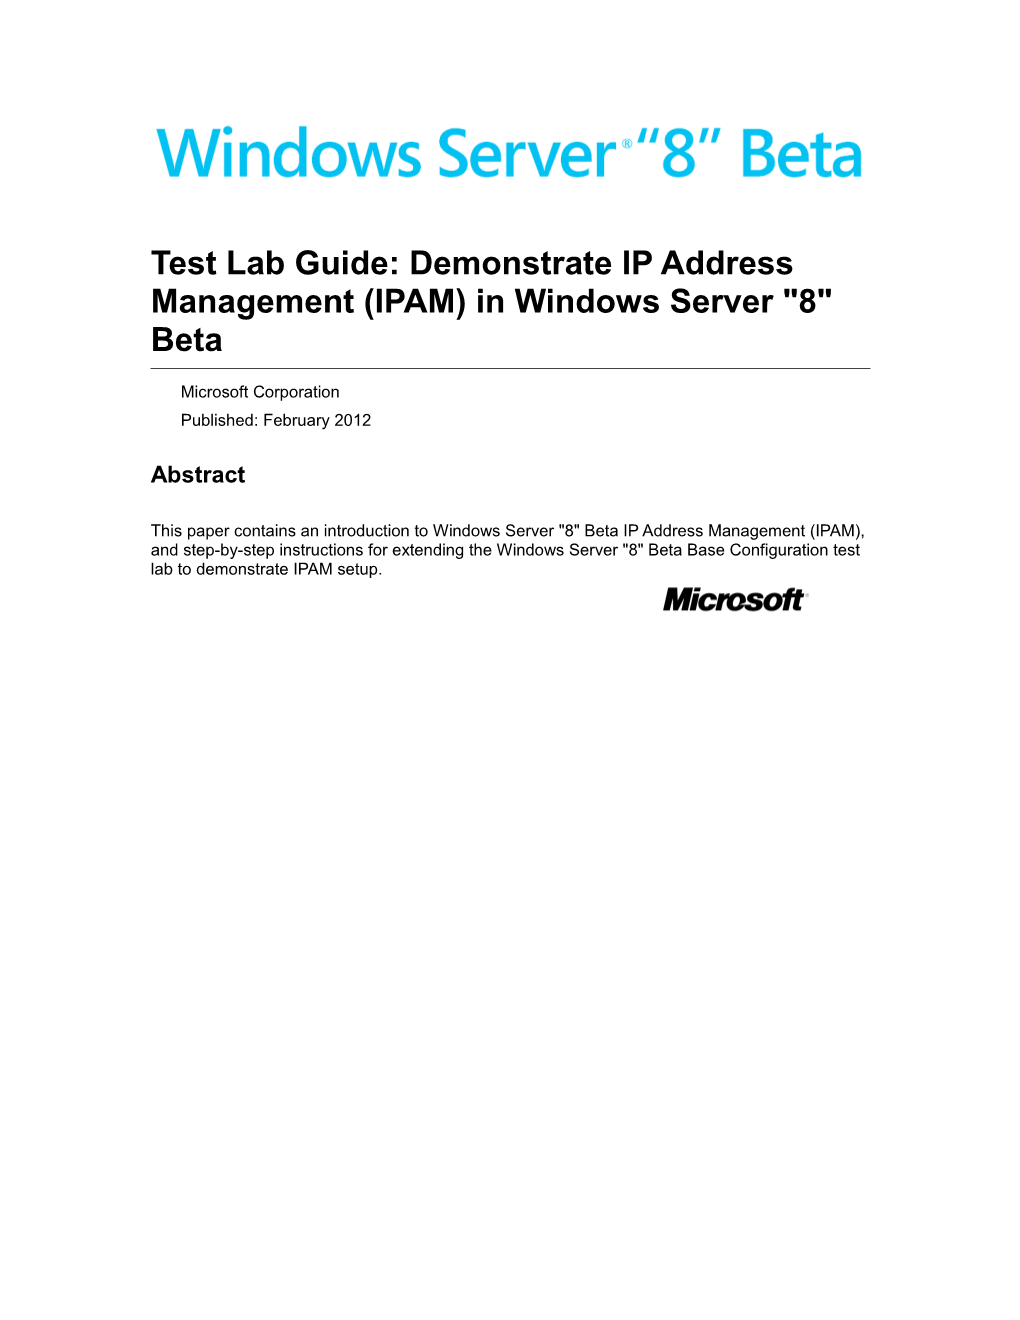 Test Lab Guide: Demonstrate IP Address Management (IPAM) in Windows Server 8 Beta